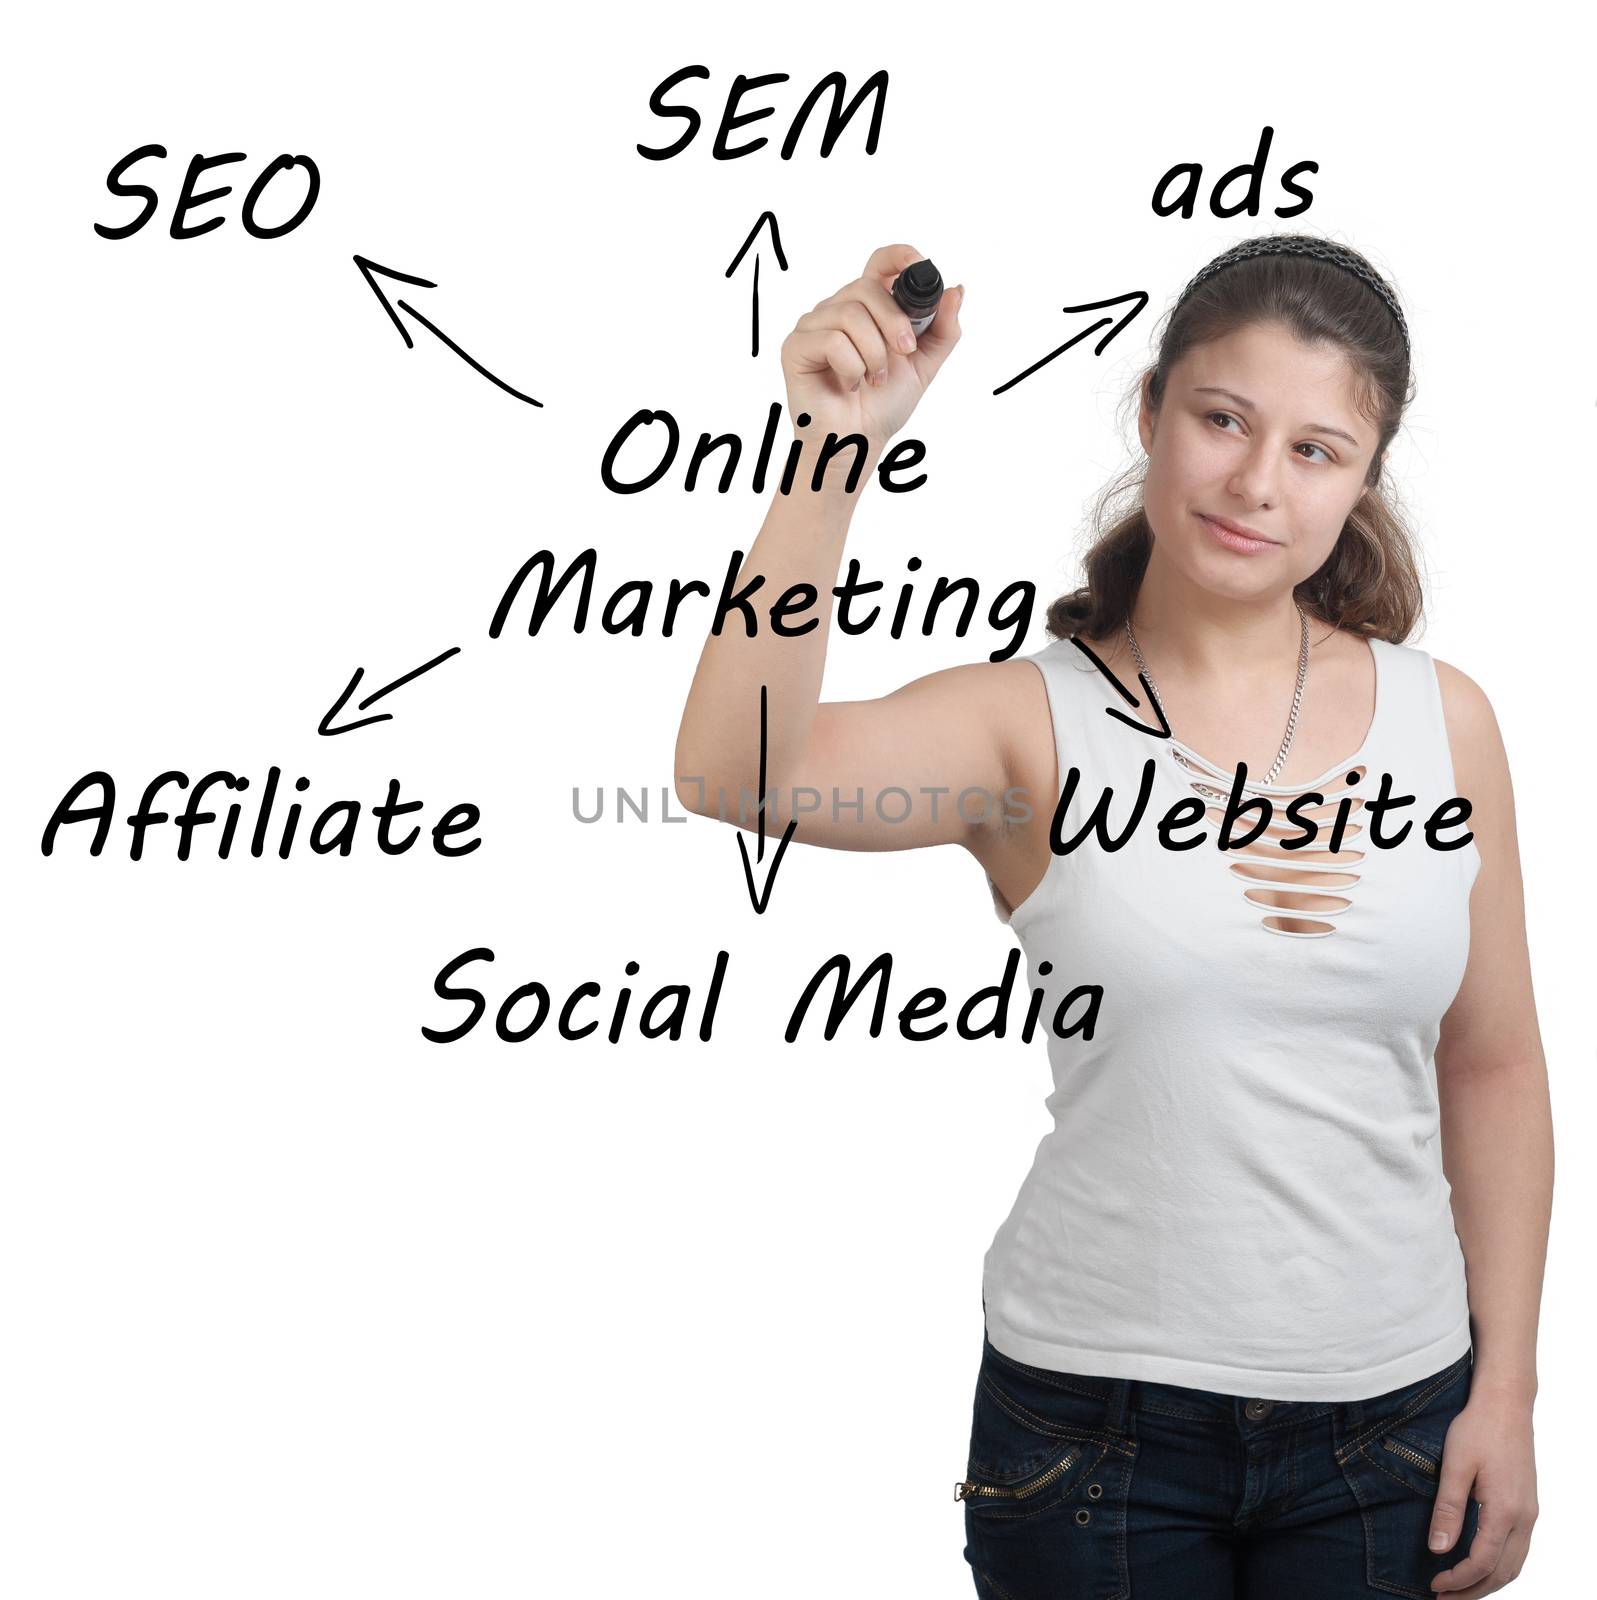 Online Marketing Concept  by Mazirama